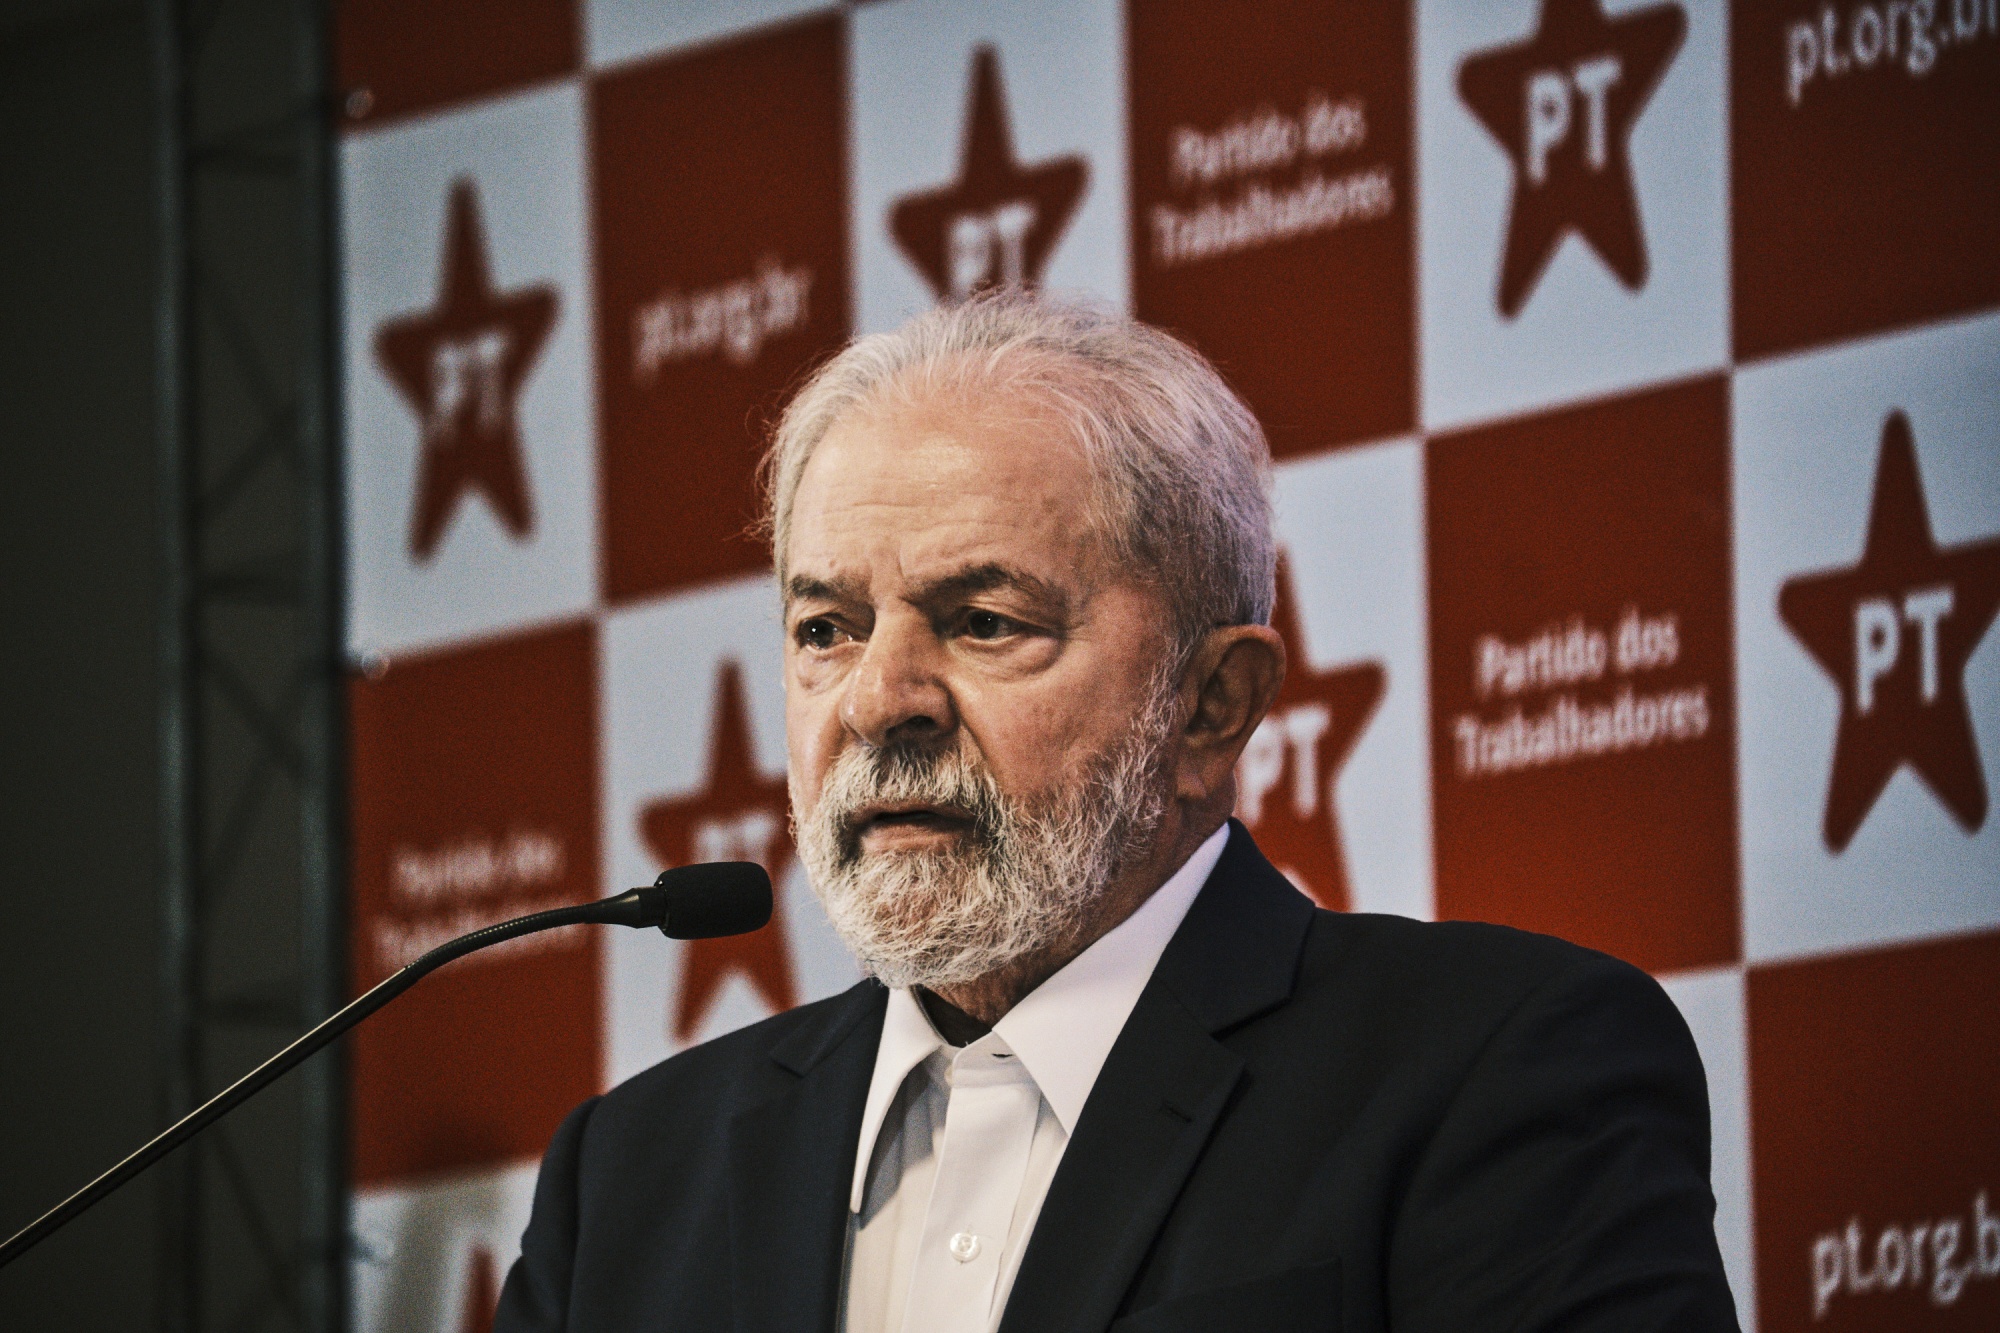 Brazilian President Lula's November initiatives for racial